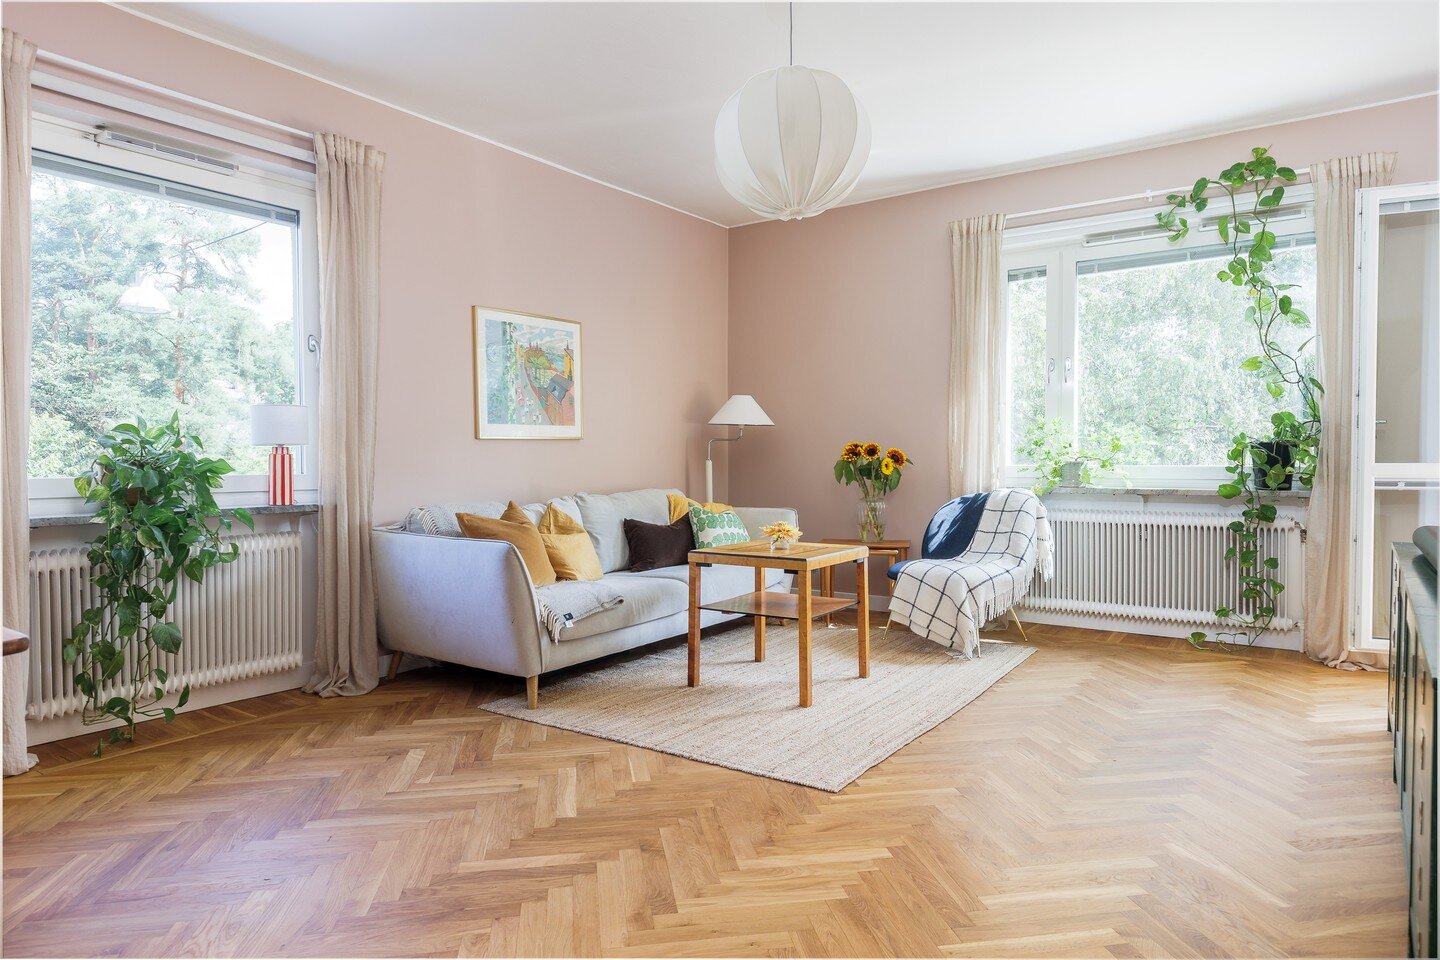 Nice apartment with a fantastic parquet floor. I really liked the kitchen too.

&Aring;rstav&auml;gen
👨&zwj;💼@maklarerichardwall

#interiordesign #interior #nordicchrome
#nordicliving
#interior4all
#interiordesign
#interiorphotographer
#scandinavia